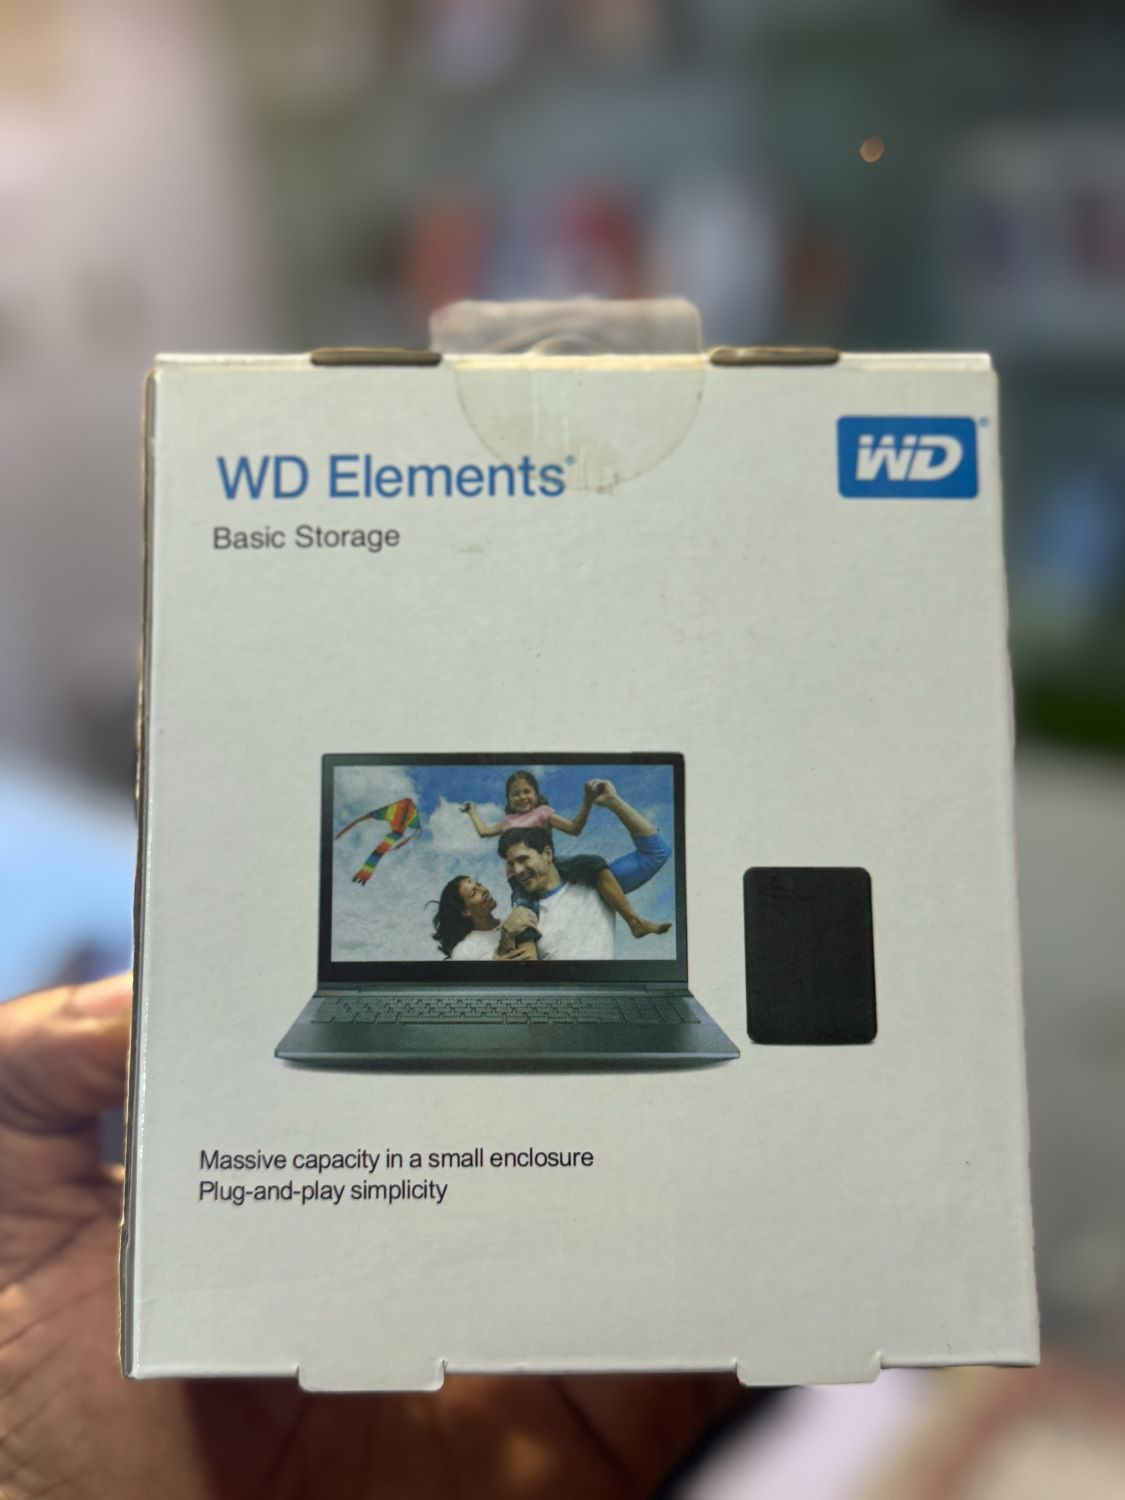 WD Elements 500GB HDD External Storage